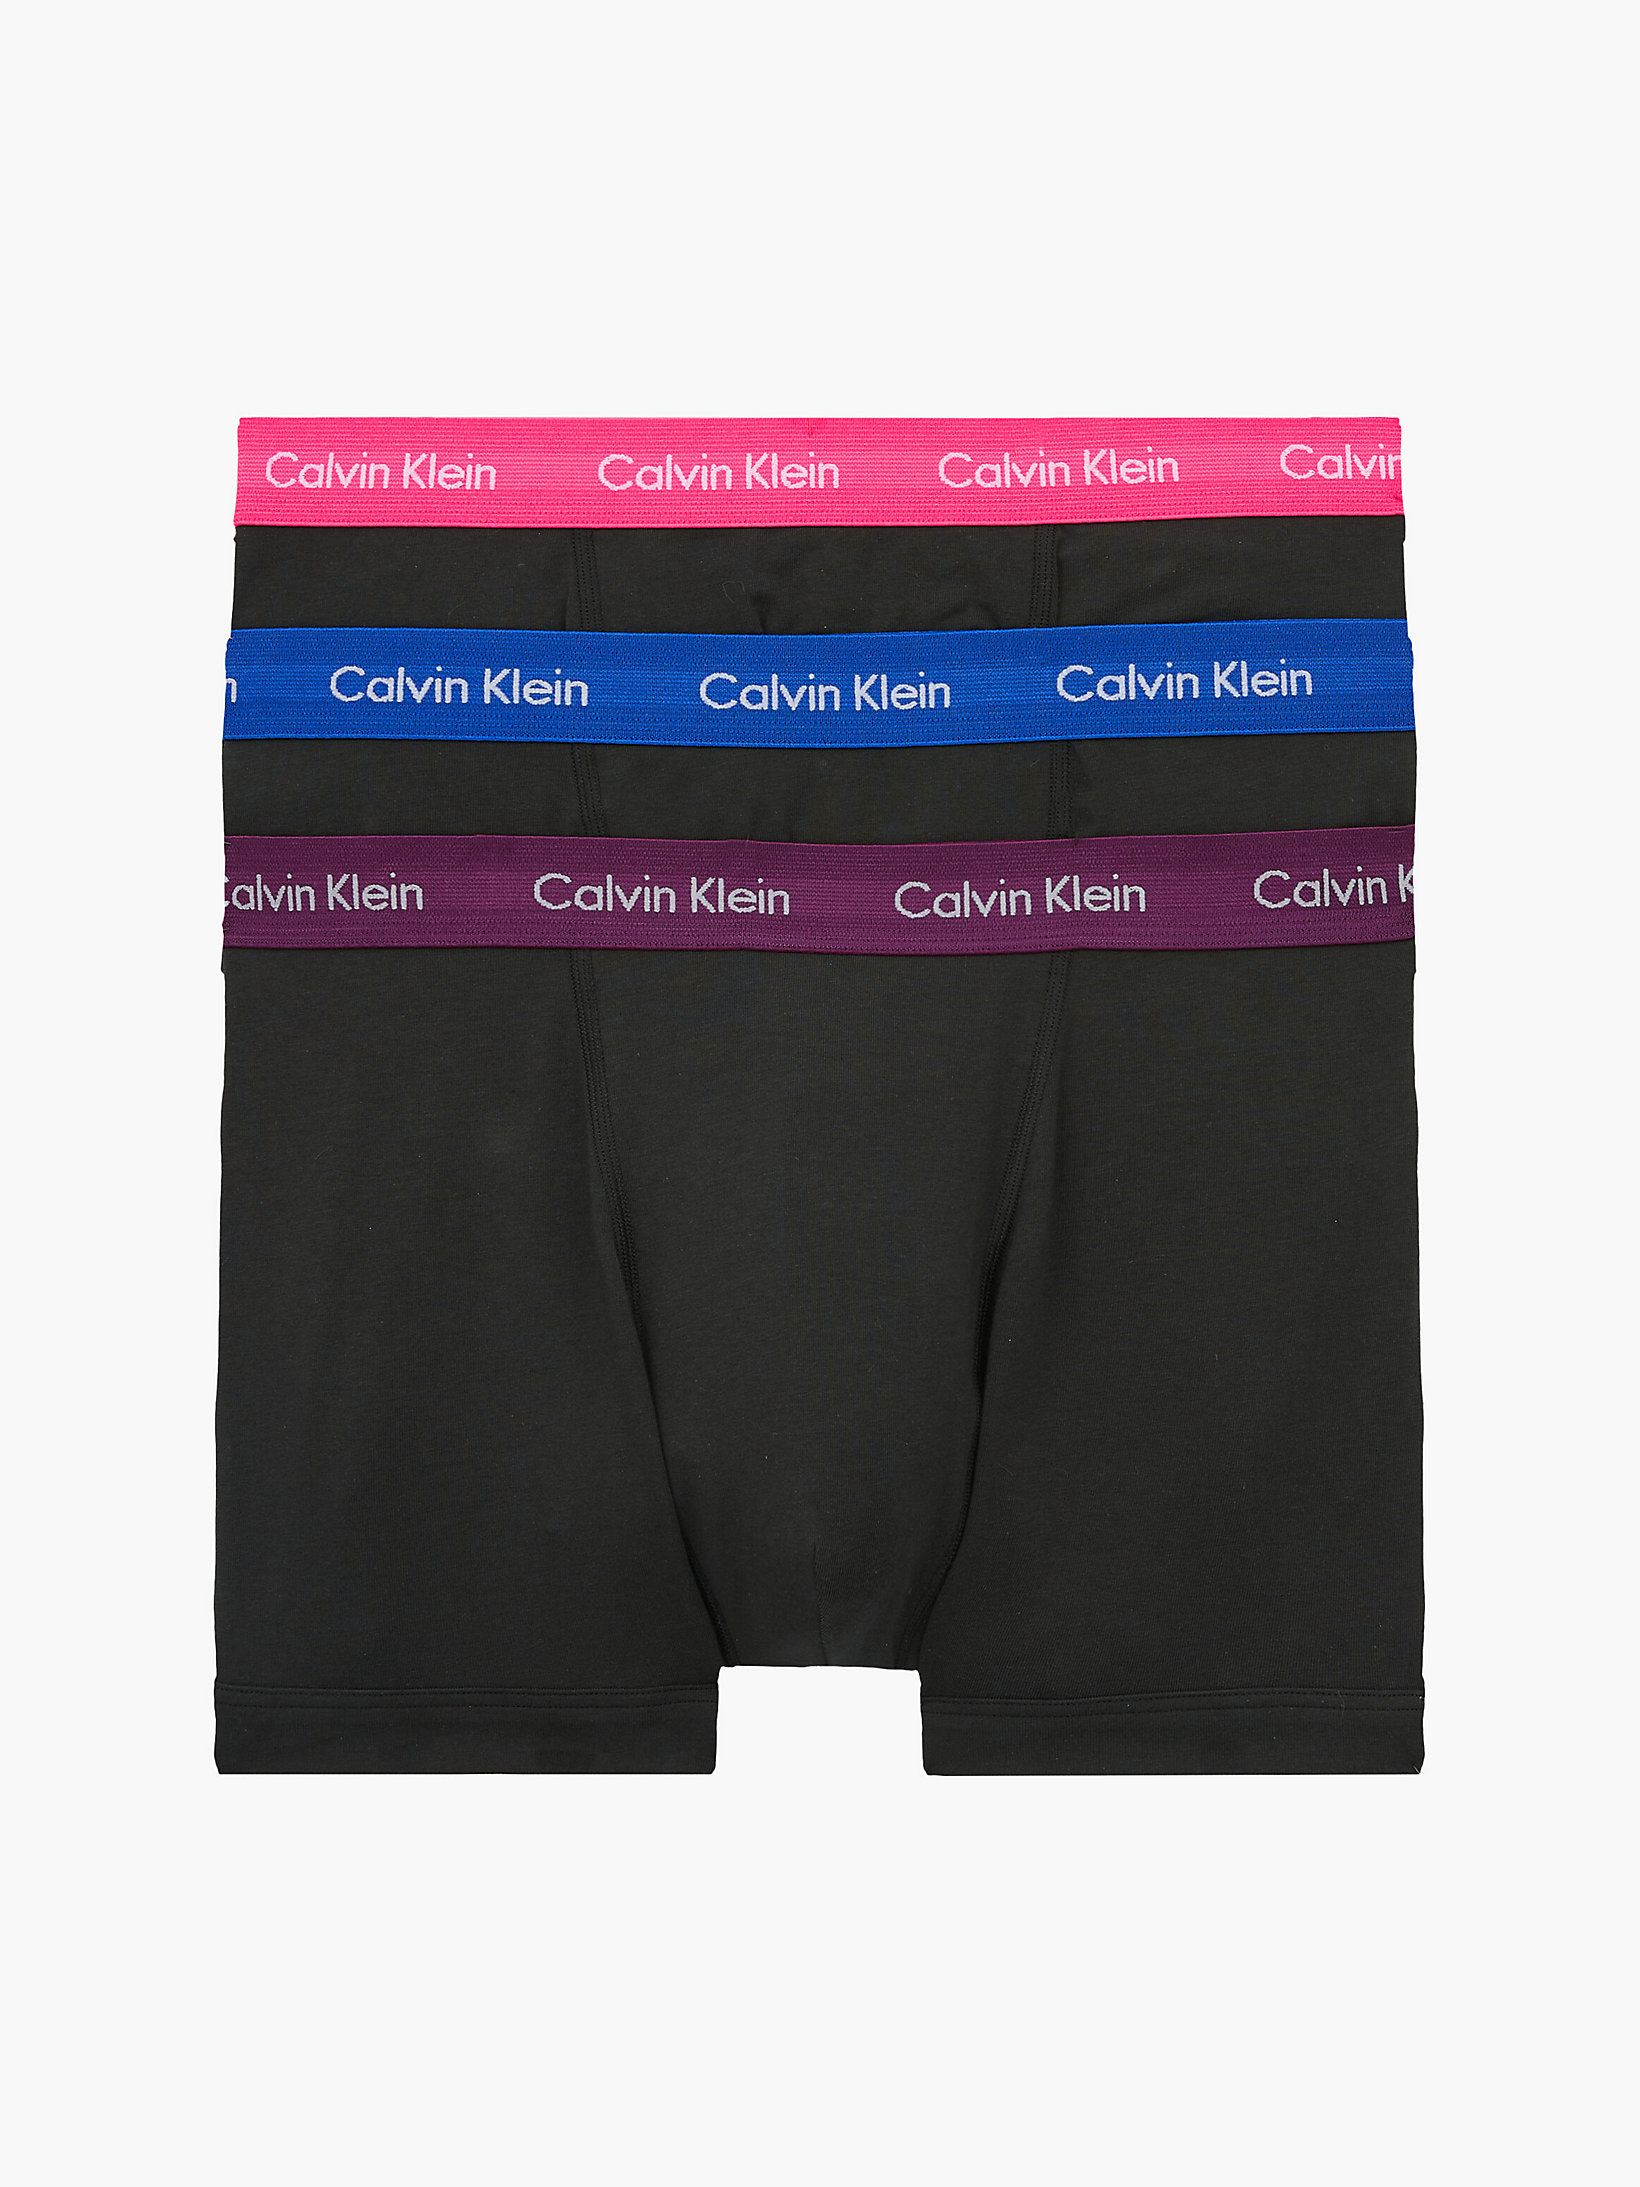 B-Groovy Plum/bright Rose/blue 3 Pack Trunks - Cotton Stretch undefined men Calvin Klein